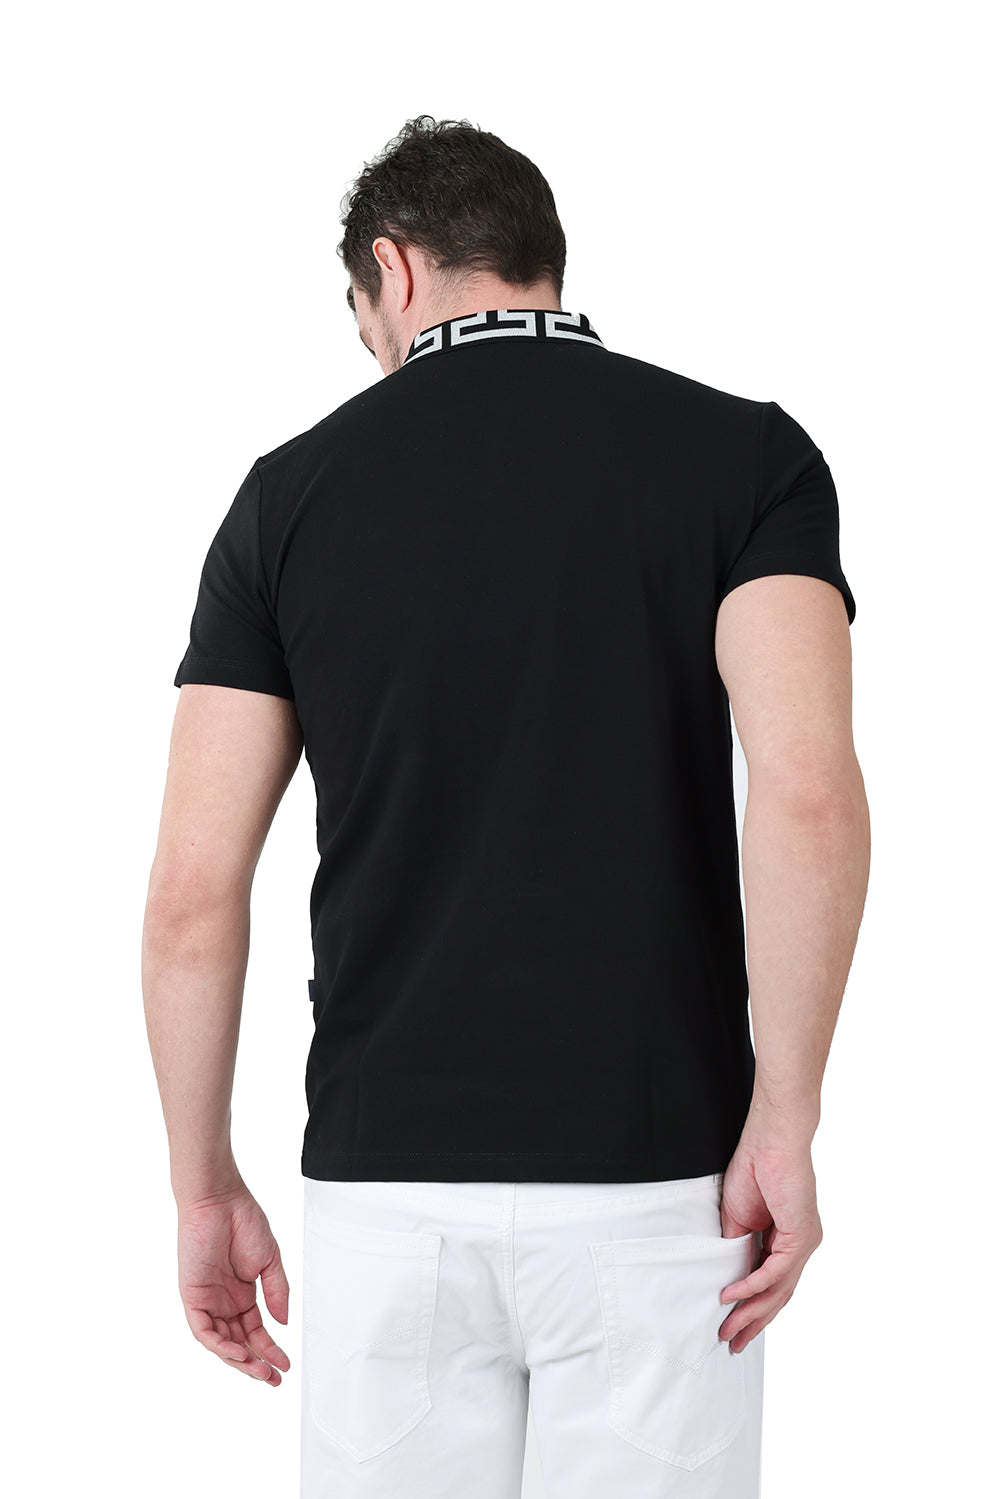 Barabas Men's Greek Key Printed Pattern Designer Polo Shirts PS121 Black Silver